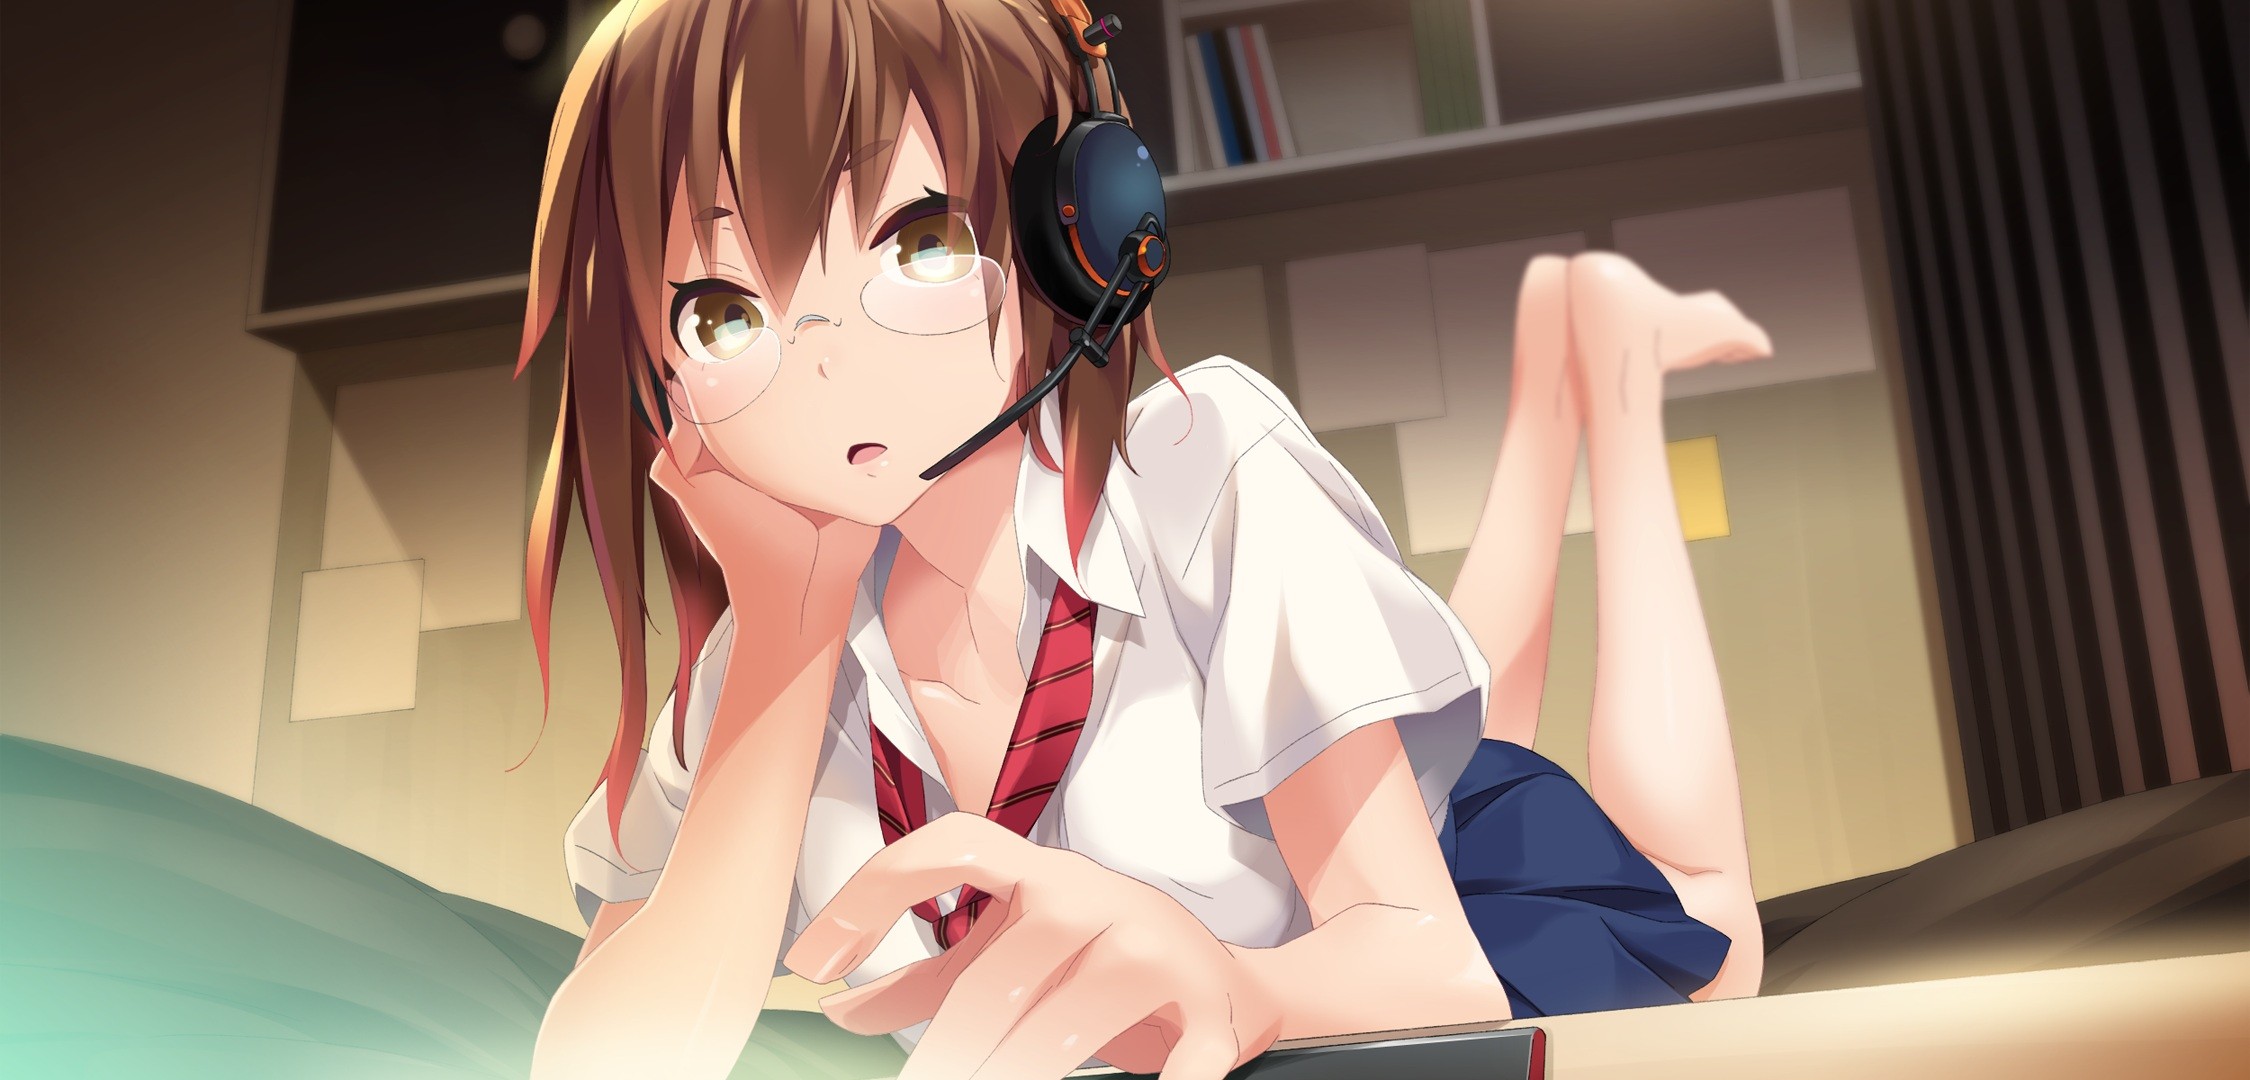 Headphones Glasses Visual Novels Anime Anime Girls Headsets Brava Tsukidate Hinata Akinoko Wallpapers Hd Desktop And Mobile Backgrounds